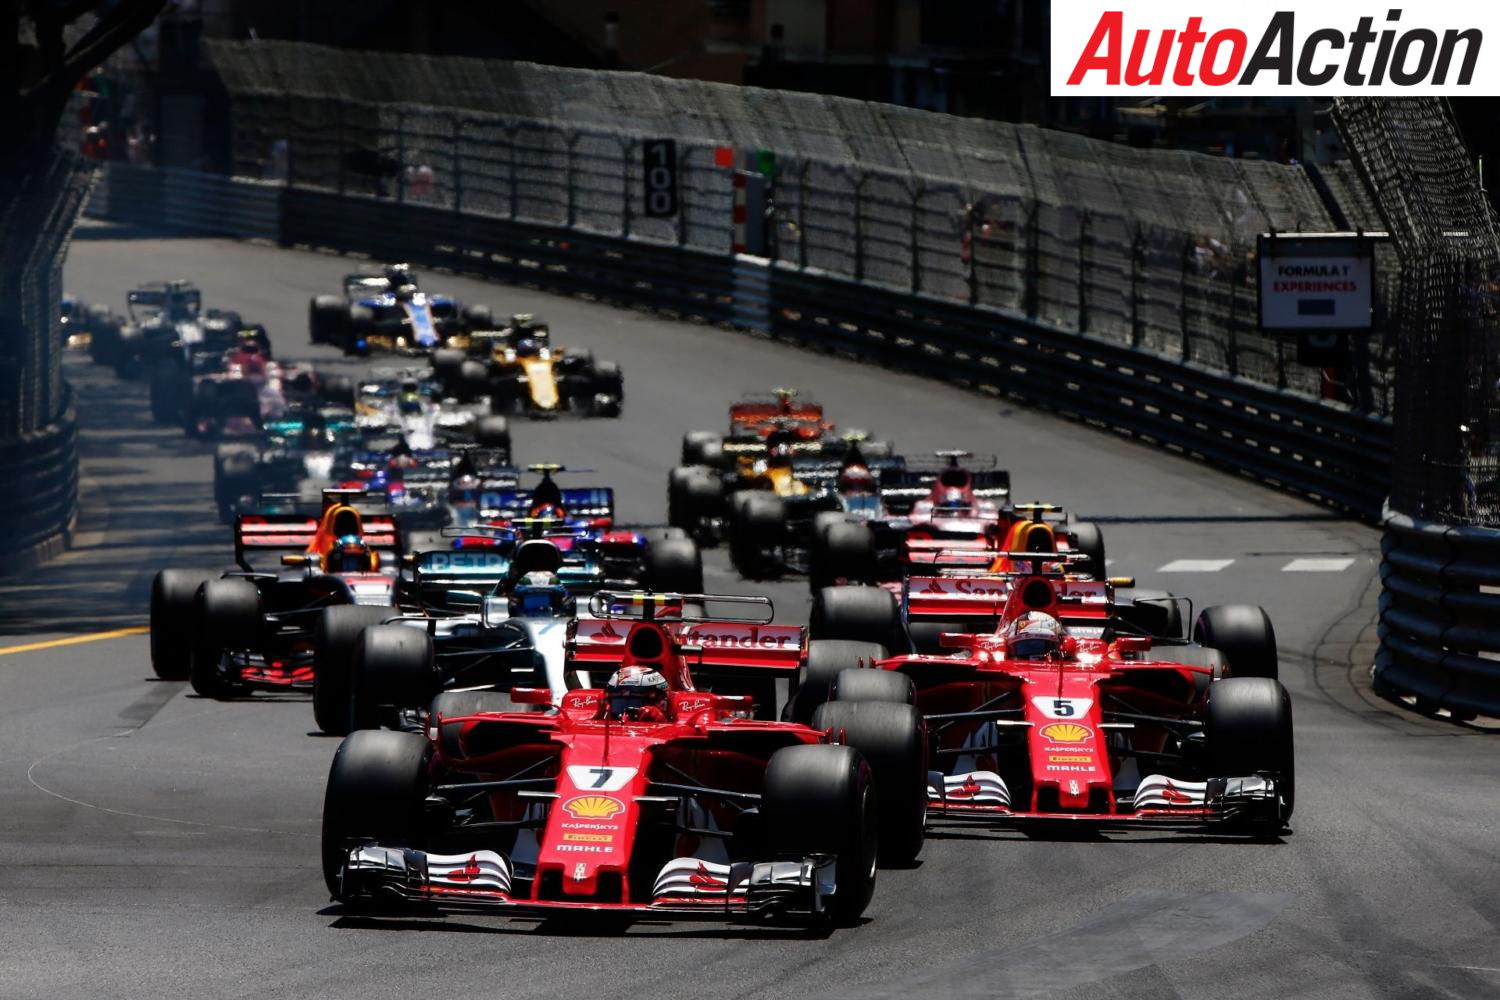 Ferrari leading the Monaco Grand Prix - Photo: LAT